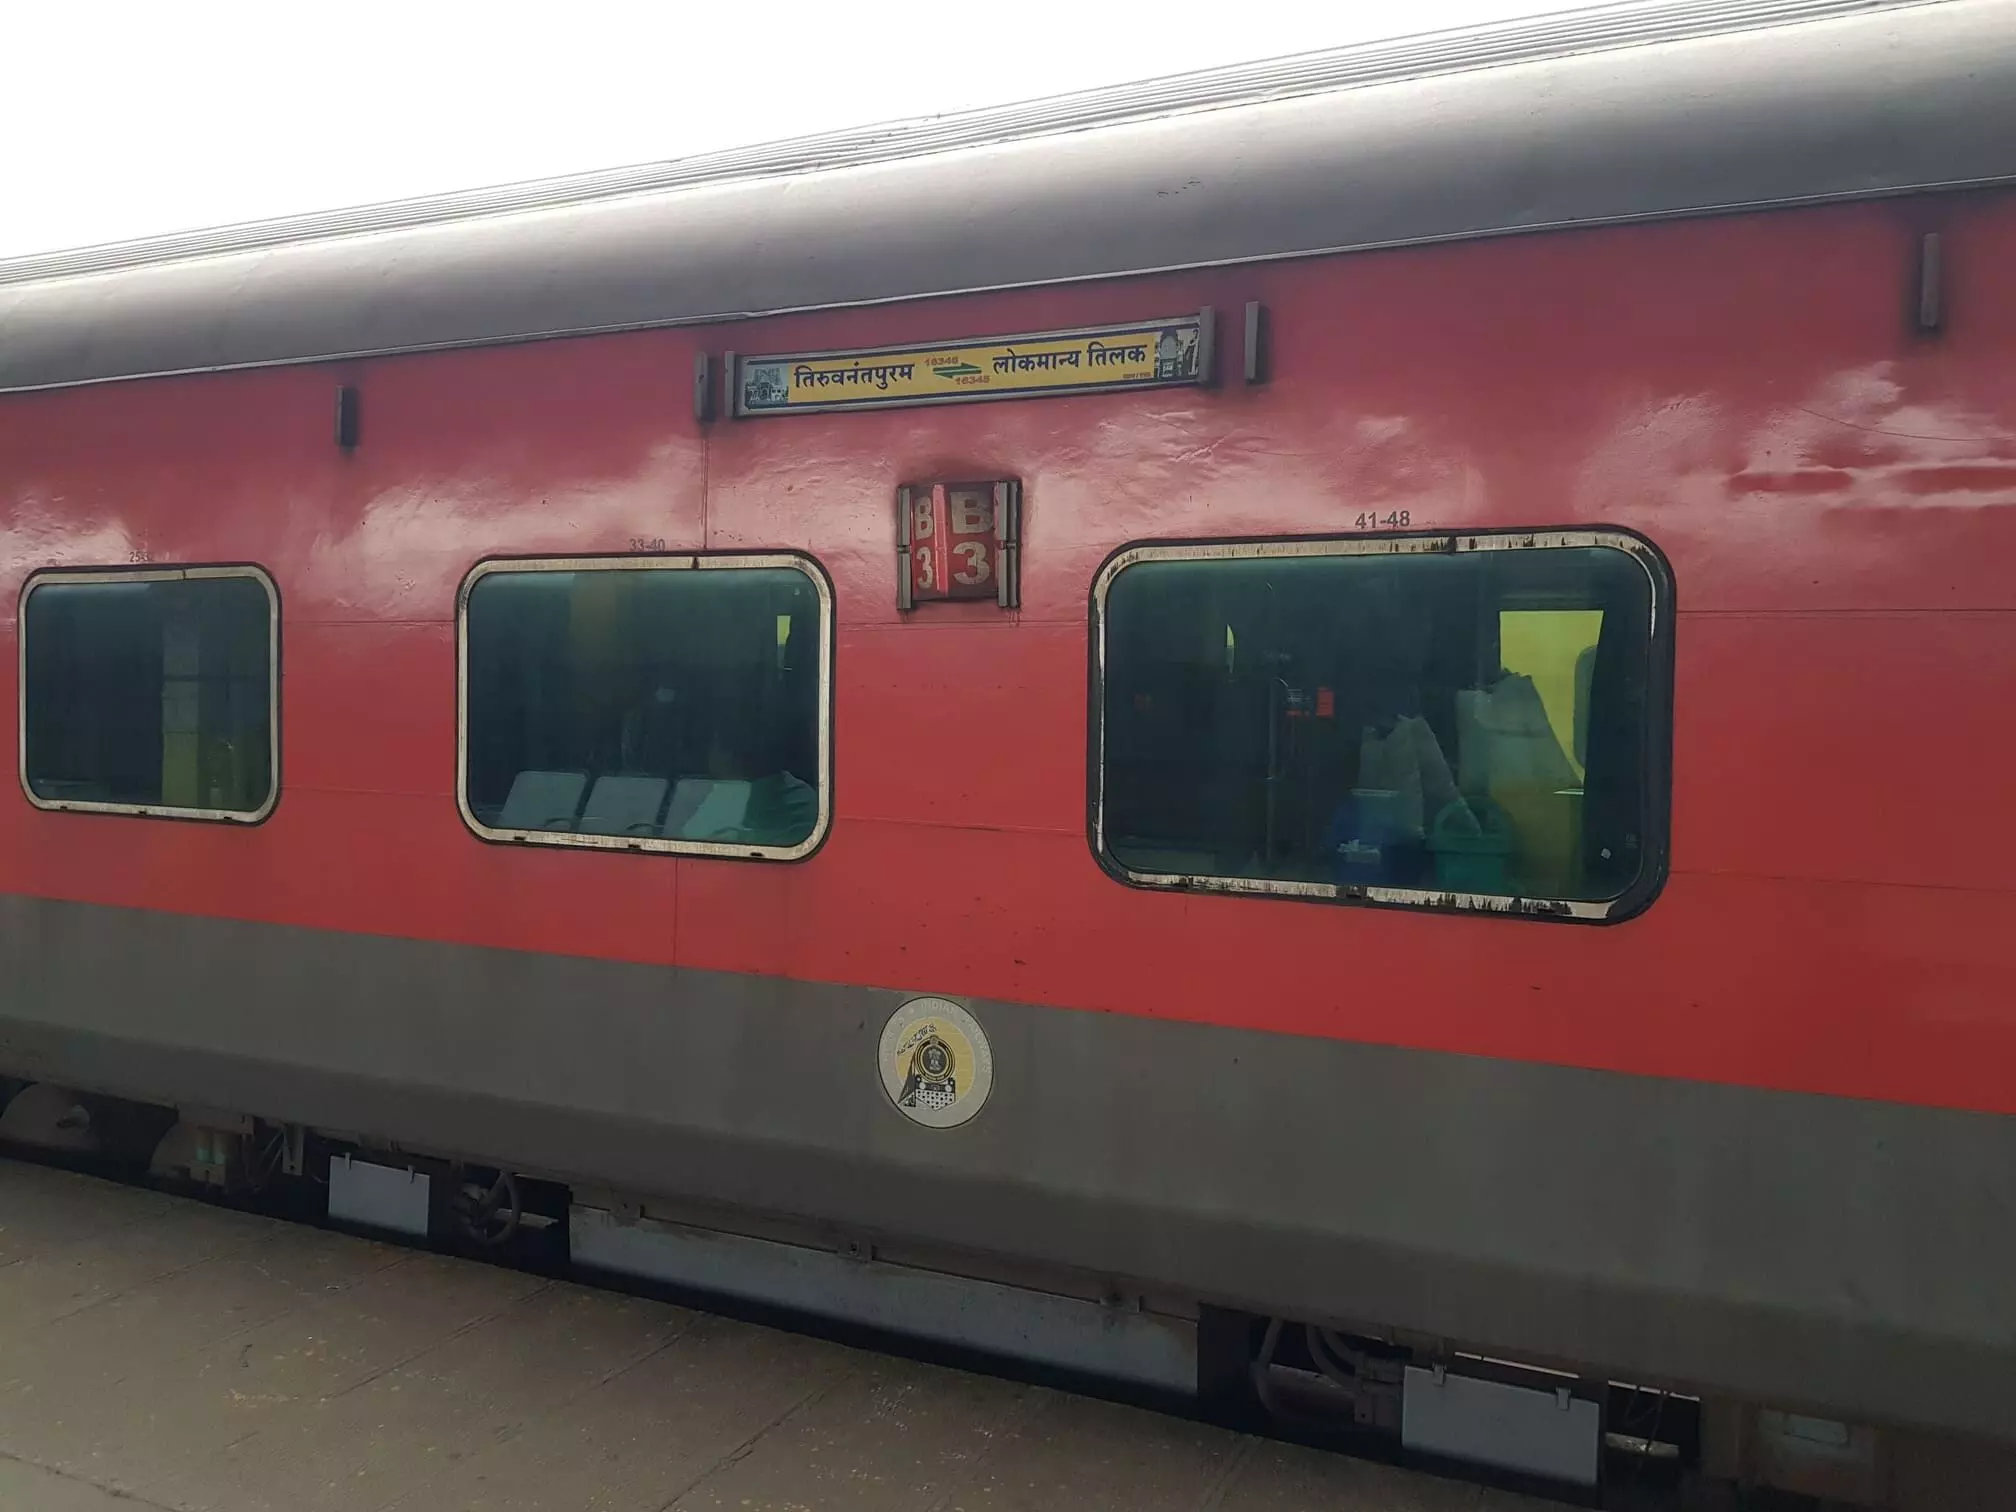 Stones pelted on Netravati Express in Kerala, windows shattered